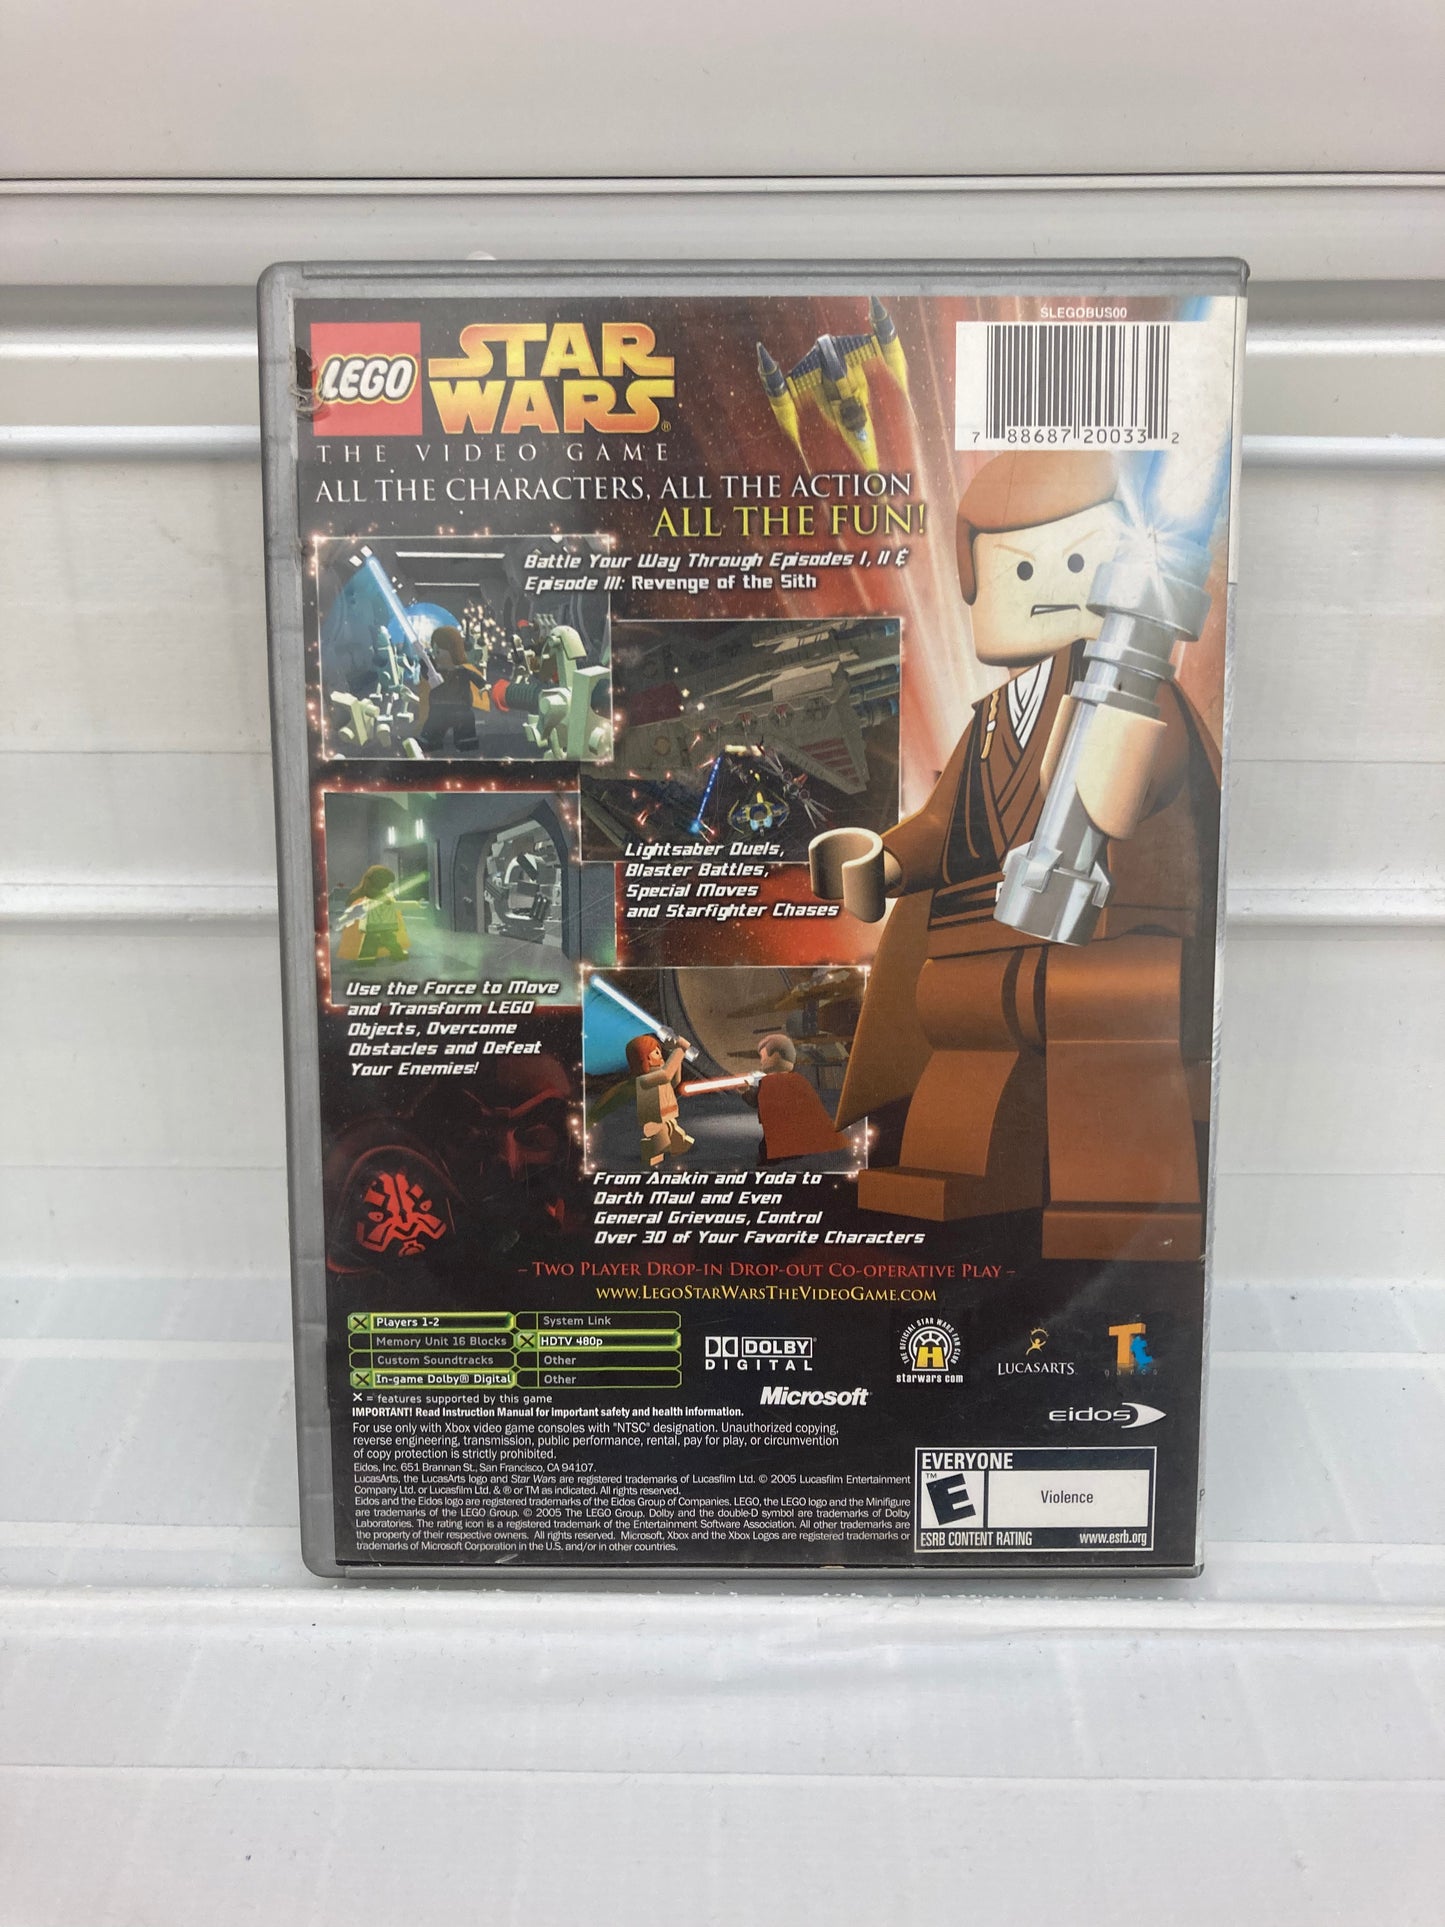 LEGO Star Wars [Platinum Hits] - Xbox